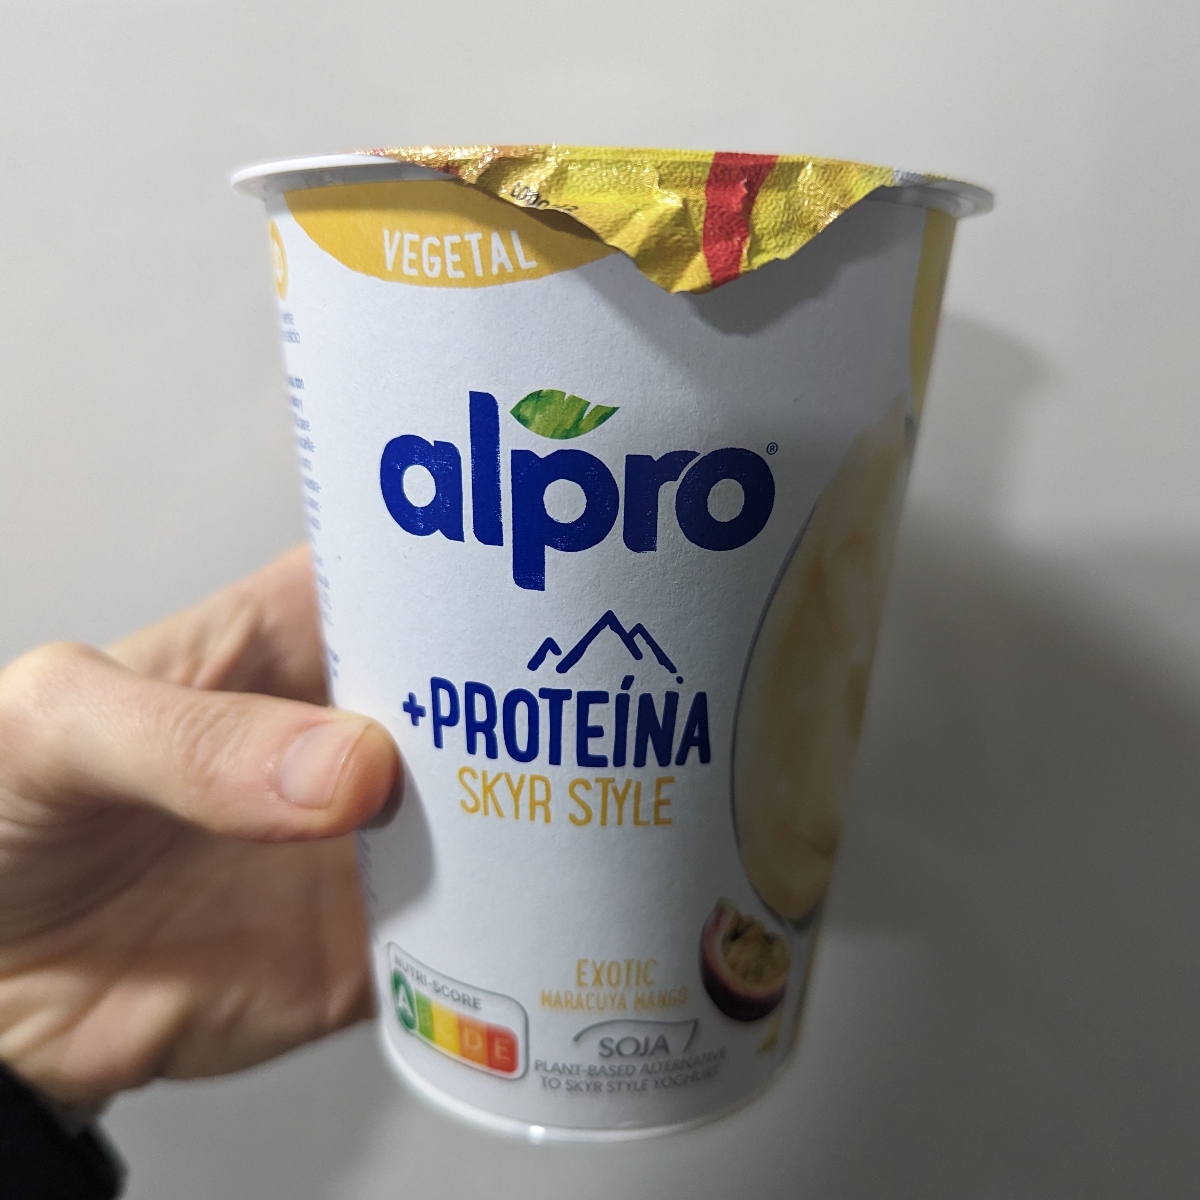 Alpro High Protein Mango - Dike & Son